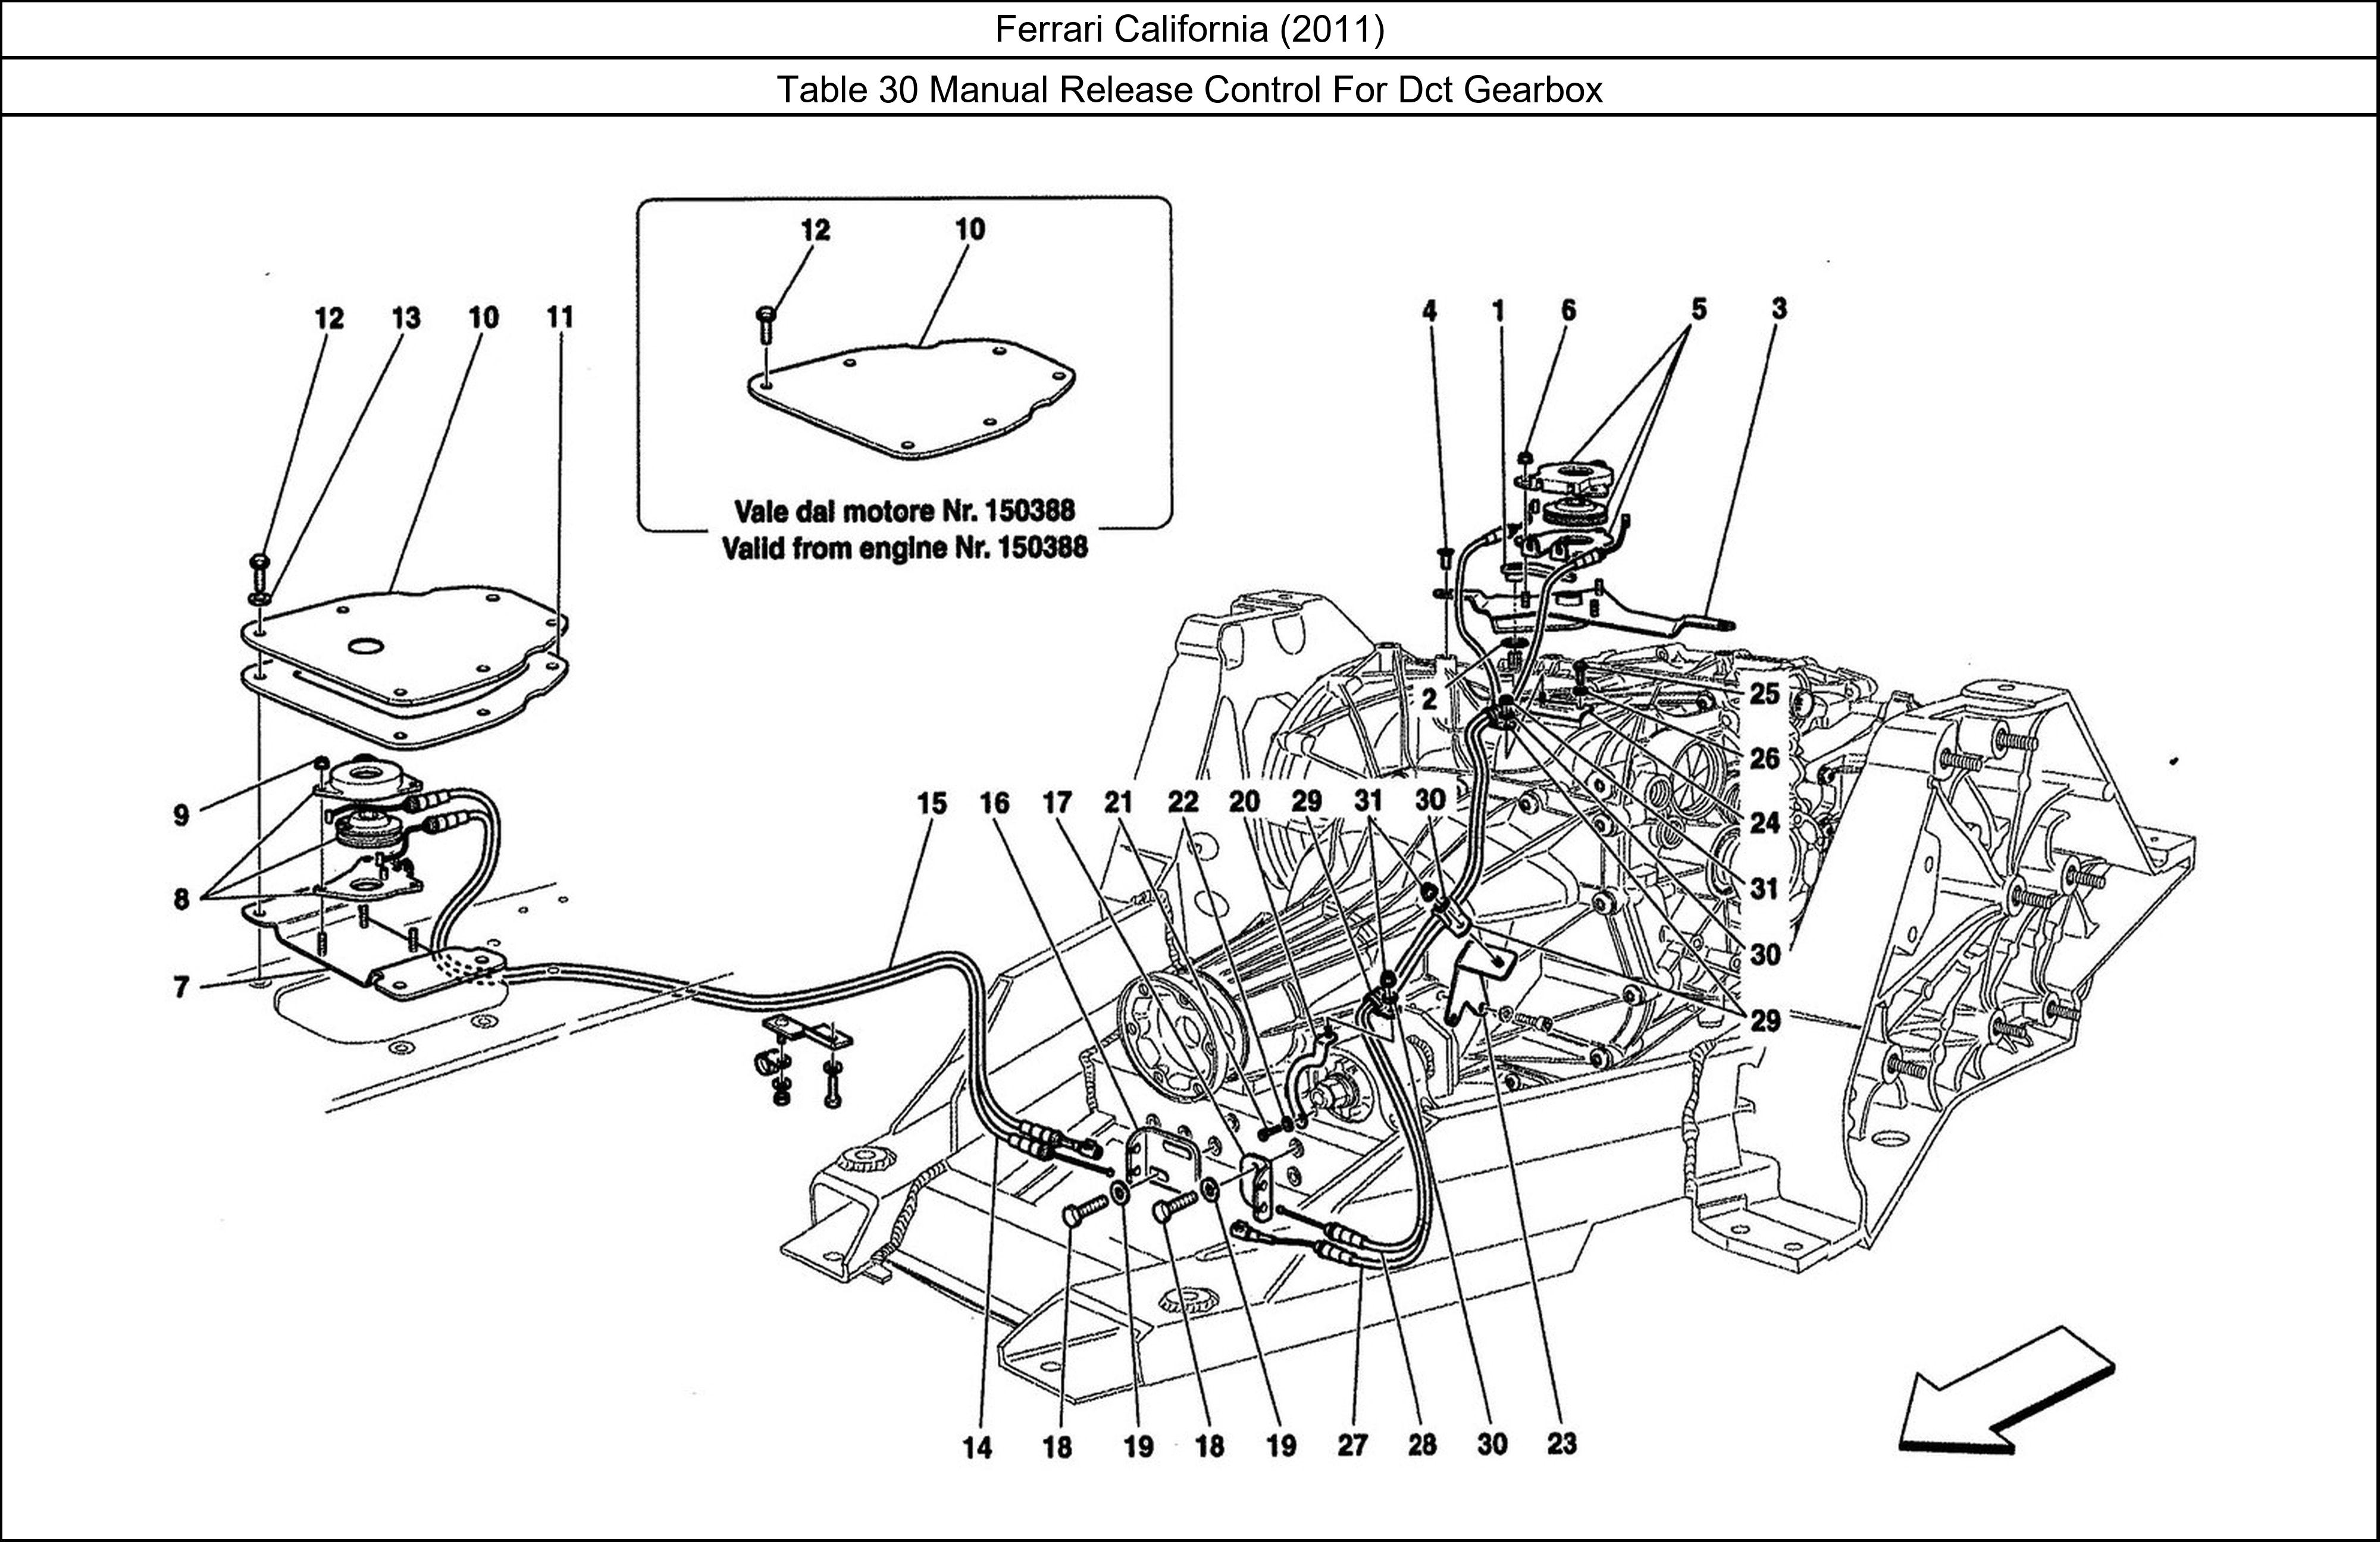 Ferrari Parts Ferrari California (2011) Table 30 Manual Release Control For Dct Gearbox